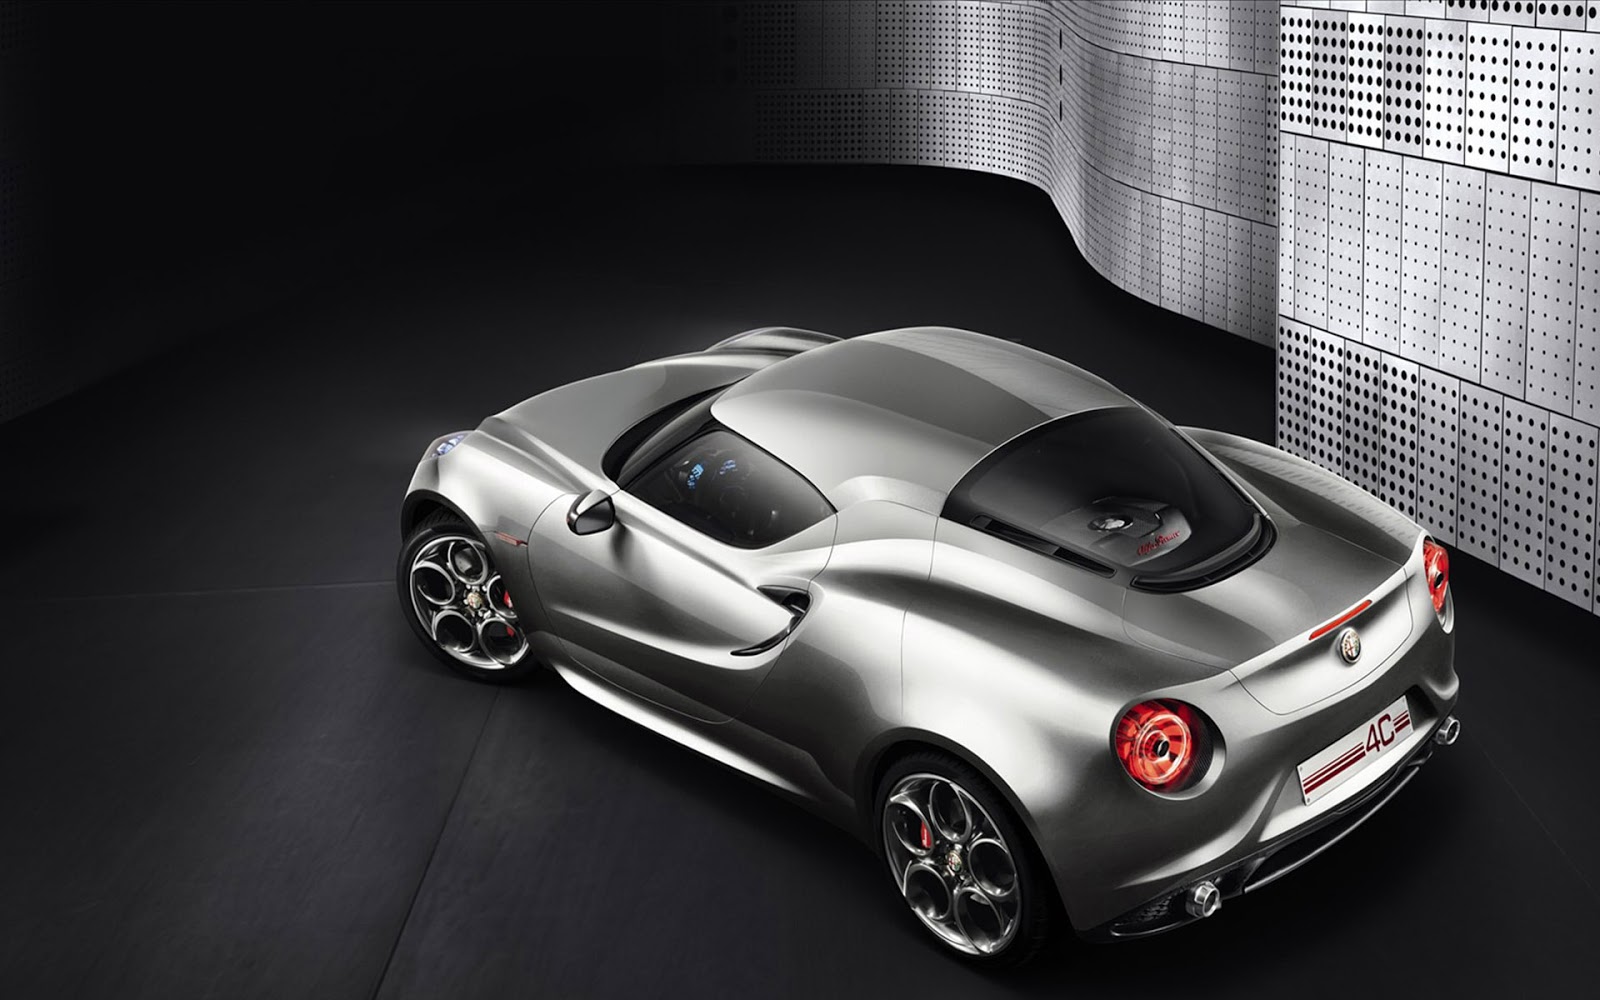 Auto Cars Wallpapers 2013: 2013 Alfa Romeo 4C Concept 2 cars model